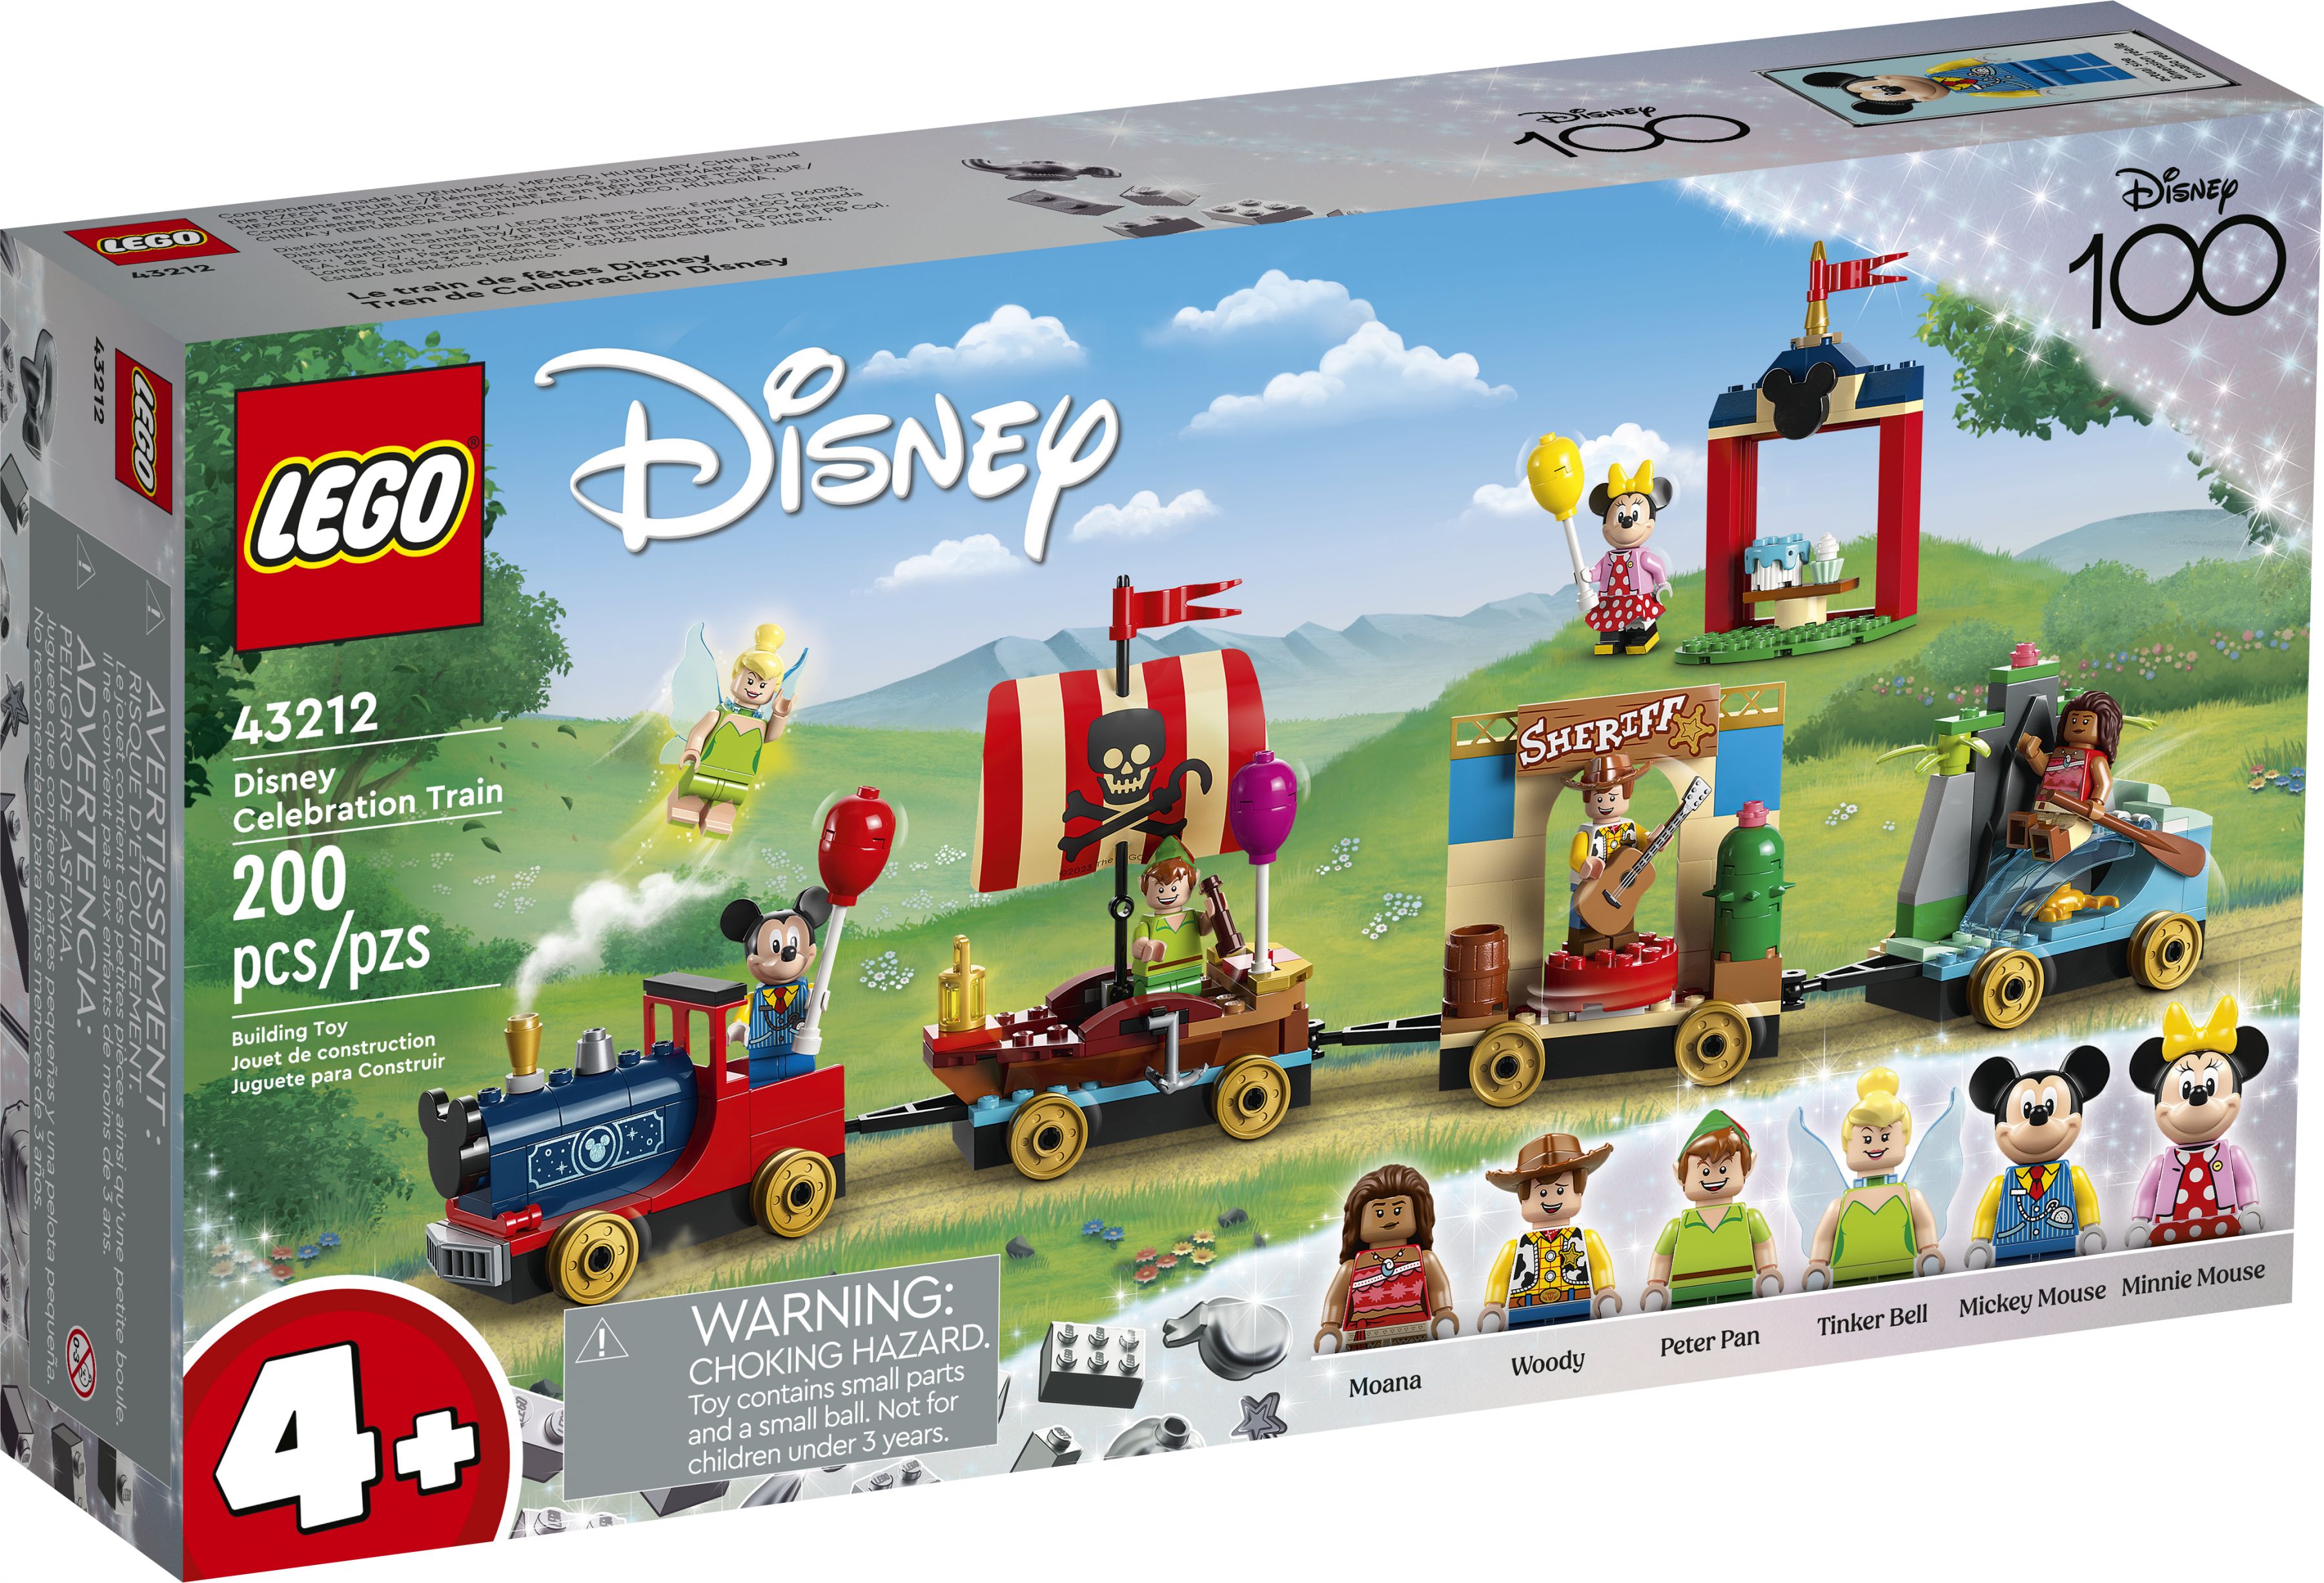 LEGO Disney 43212 Disney Geburtstagszug LEGO_43212_Box1_v39.jpg